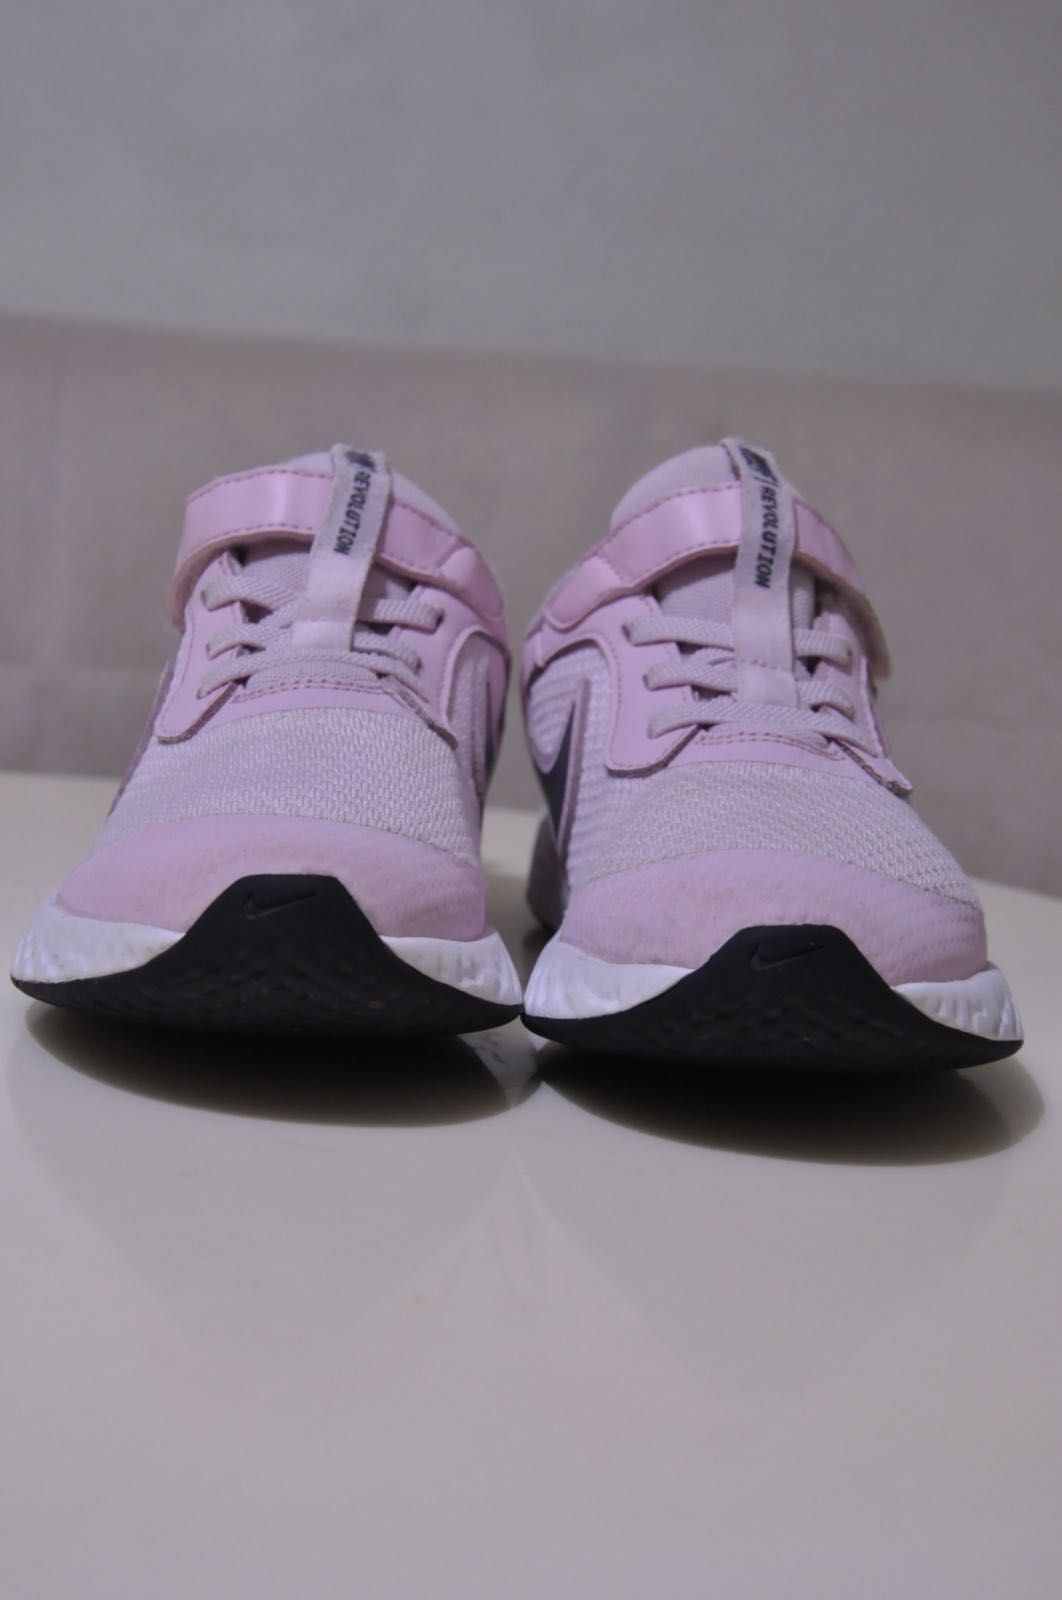 Кроссовки Nike для девочки, размер 33-34, стопа 21,5-22 см